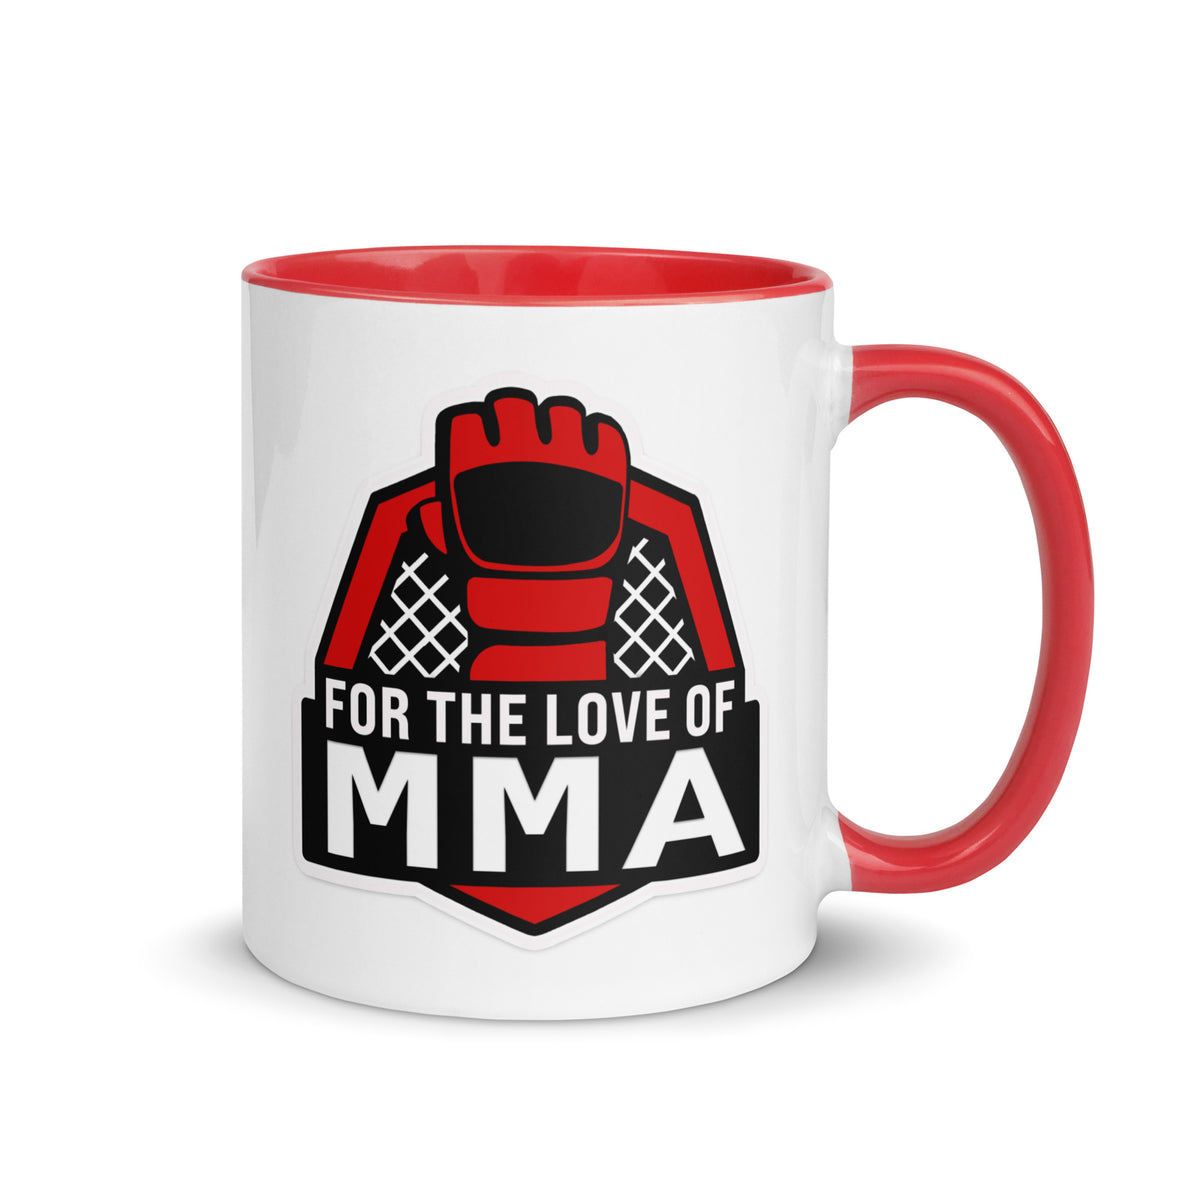 FTL MMA Mug with Red Color Inside